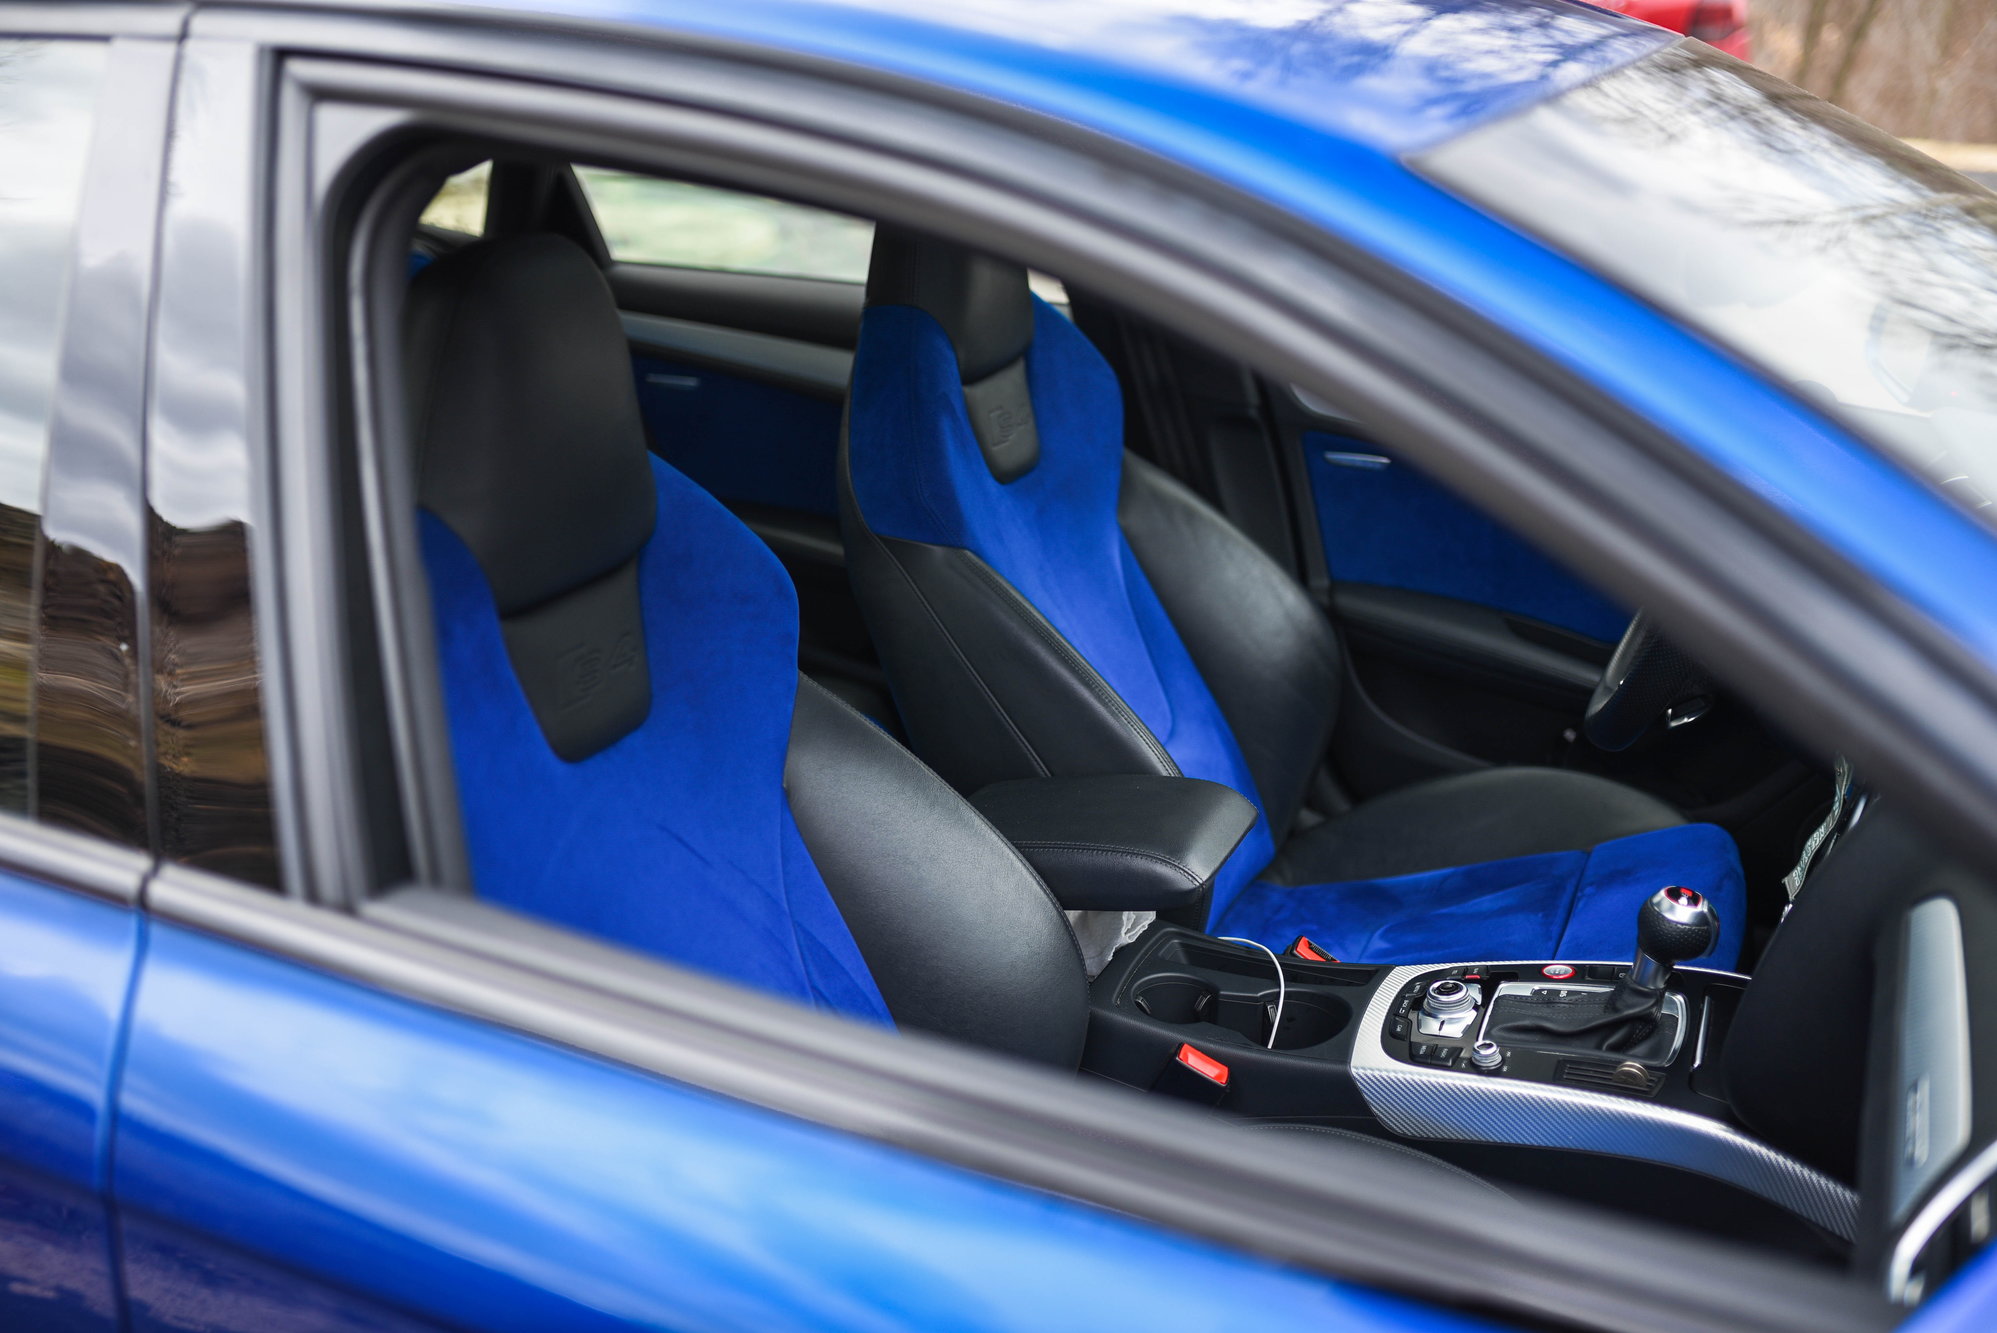 2015 Audi S4 - VERY RARE 2015 Audi S4 Prestige Sepang Blue Pearl/Audi Exclusive Nogaro Blue Suede - Used - VIN WAUKGAFL8FA078876 - 53,000 Miles - 6 cyl - 4WD - Automatic - Sedan - Blue - Keene, NH 03431, United States